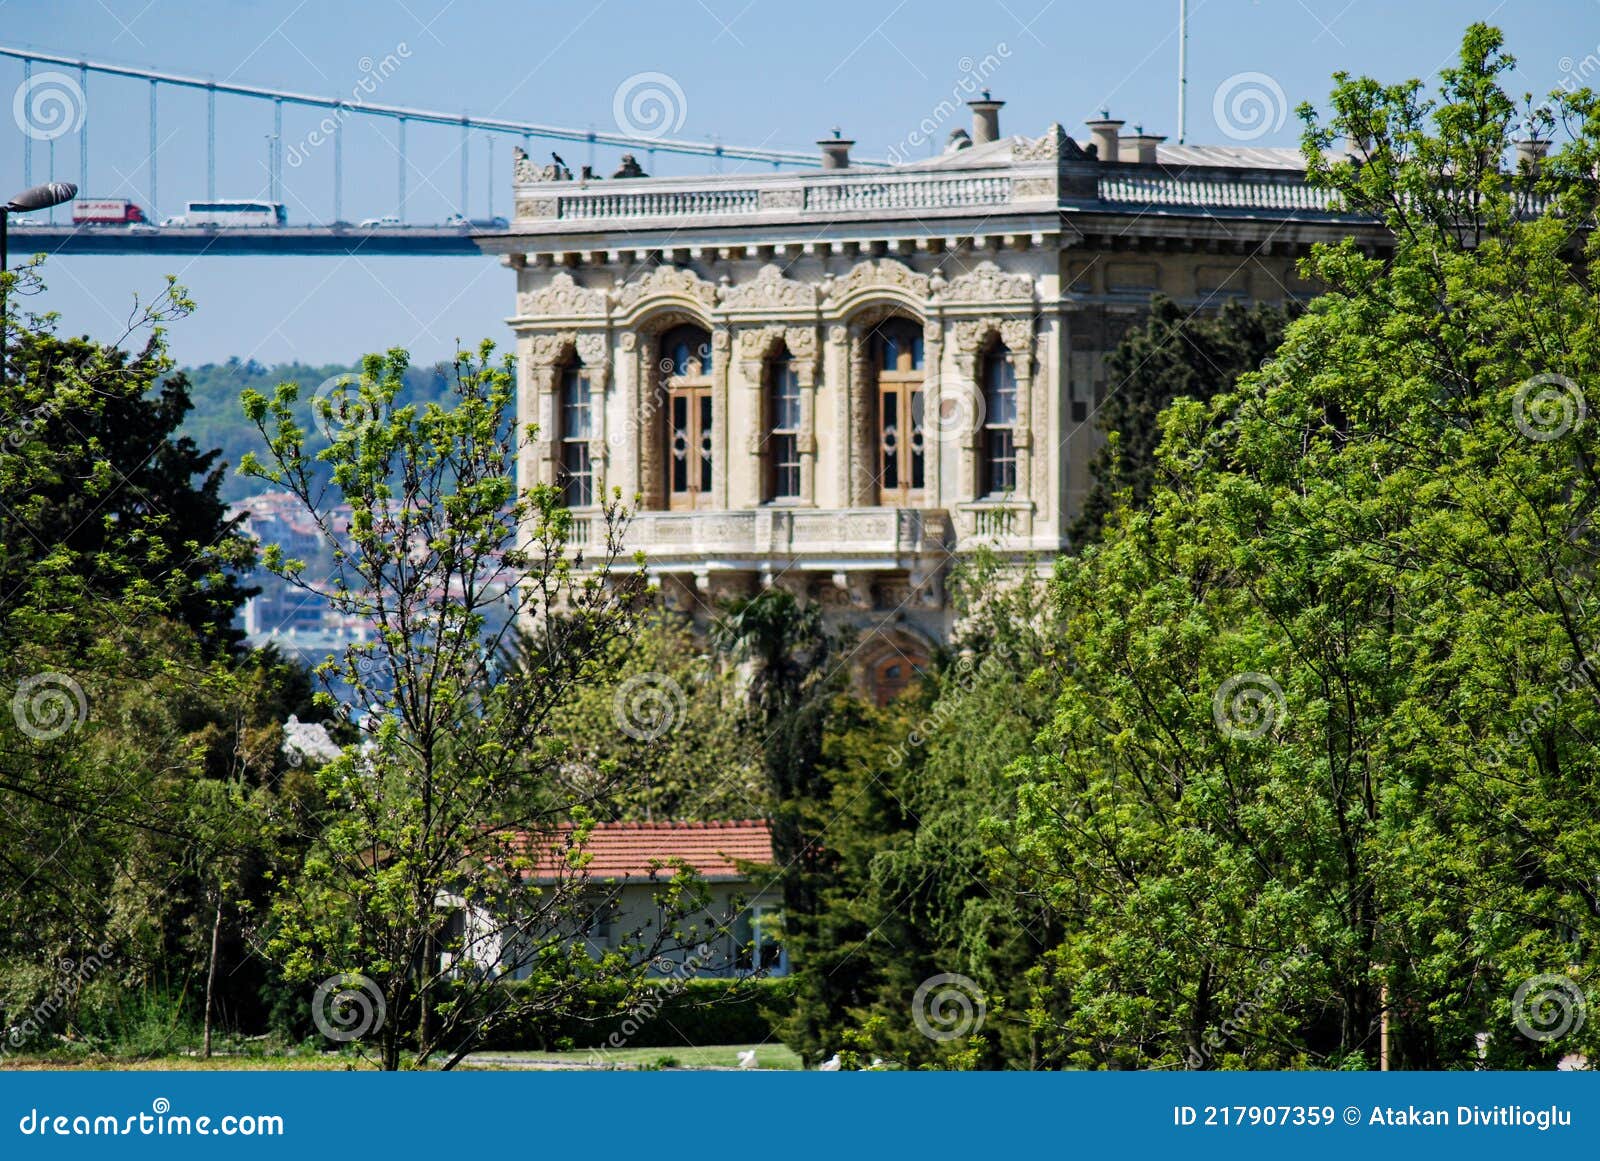 kucuksu kasri sultans mansion in istanbul